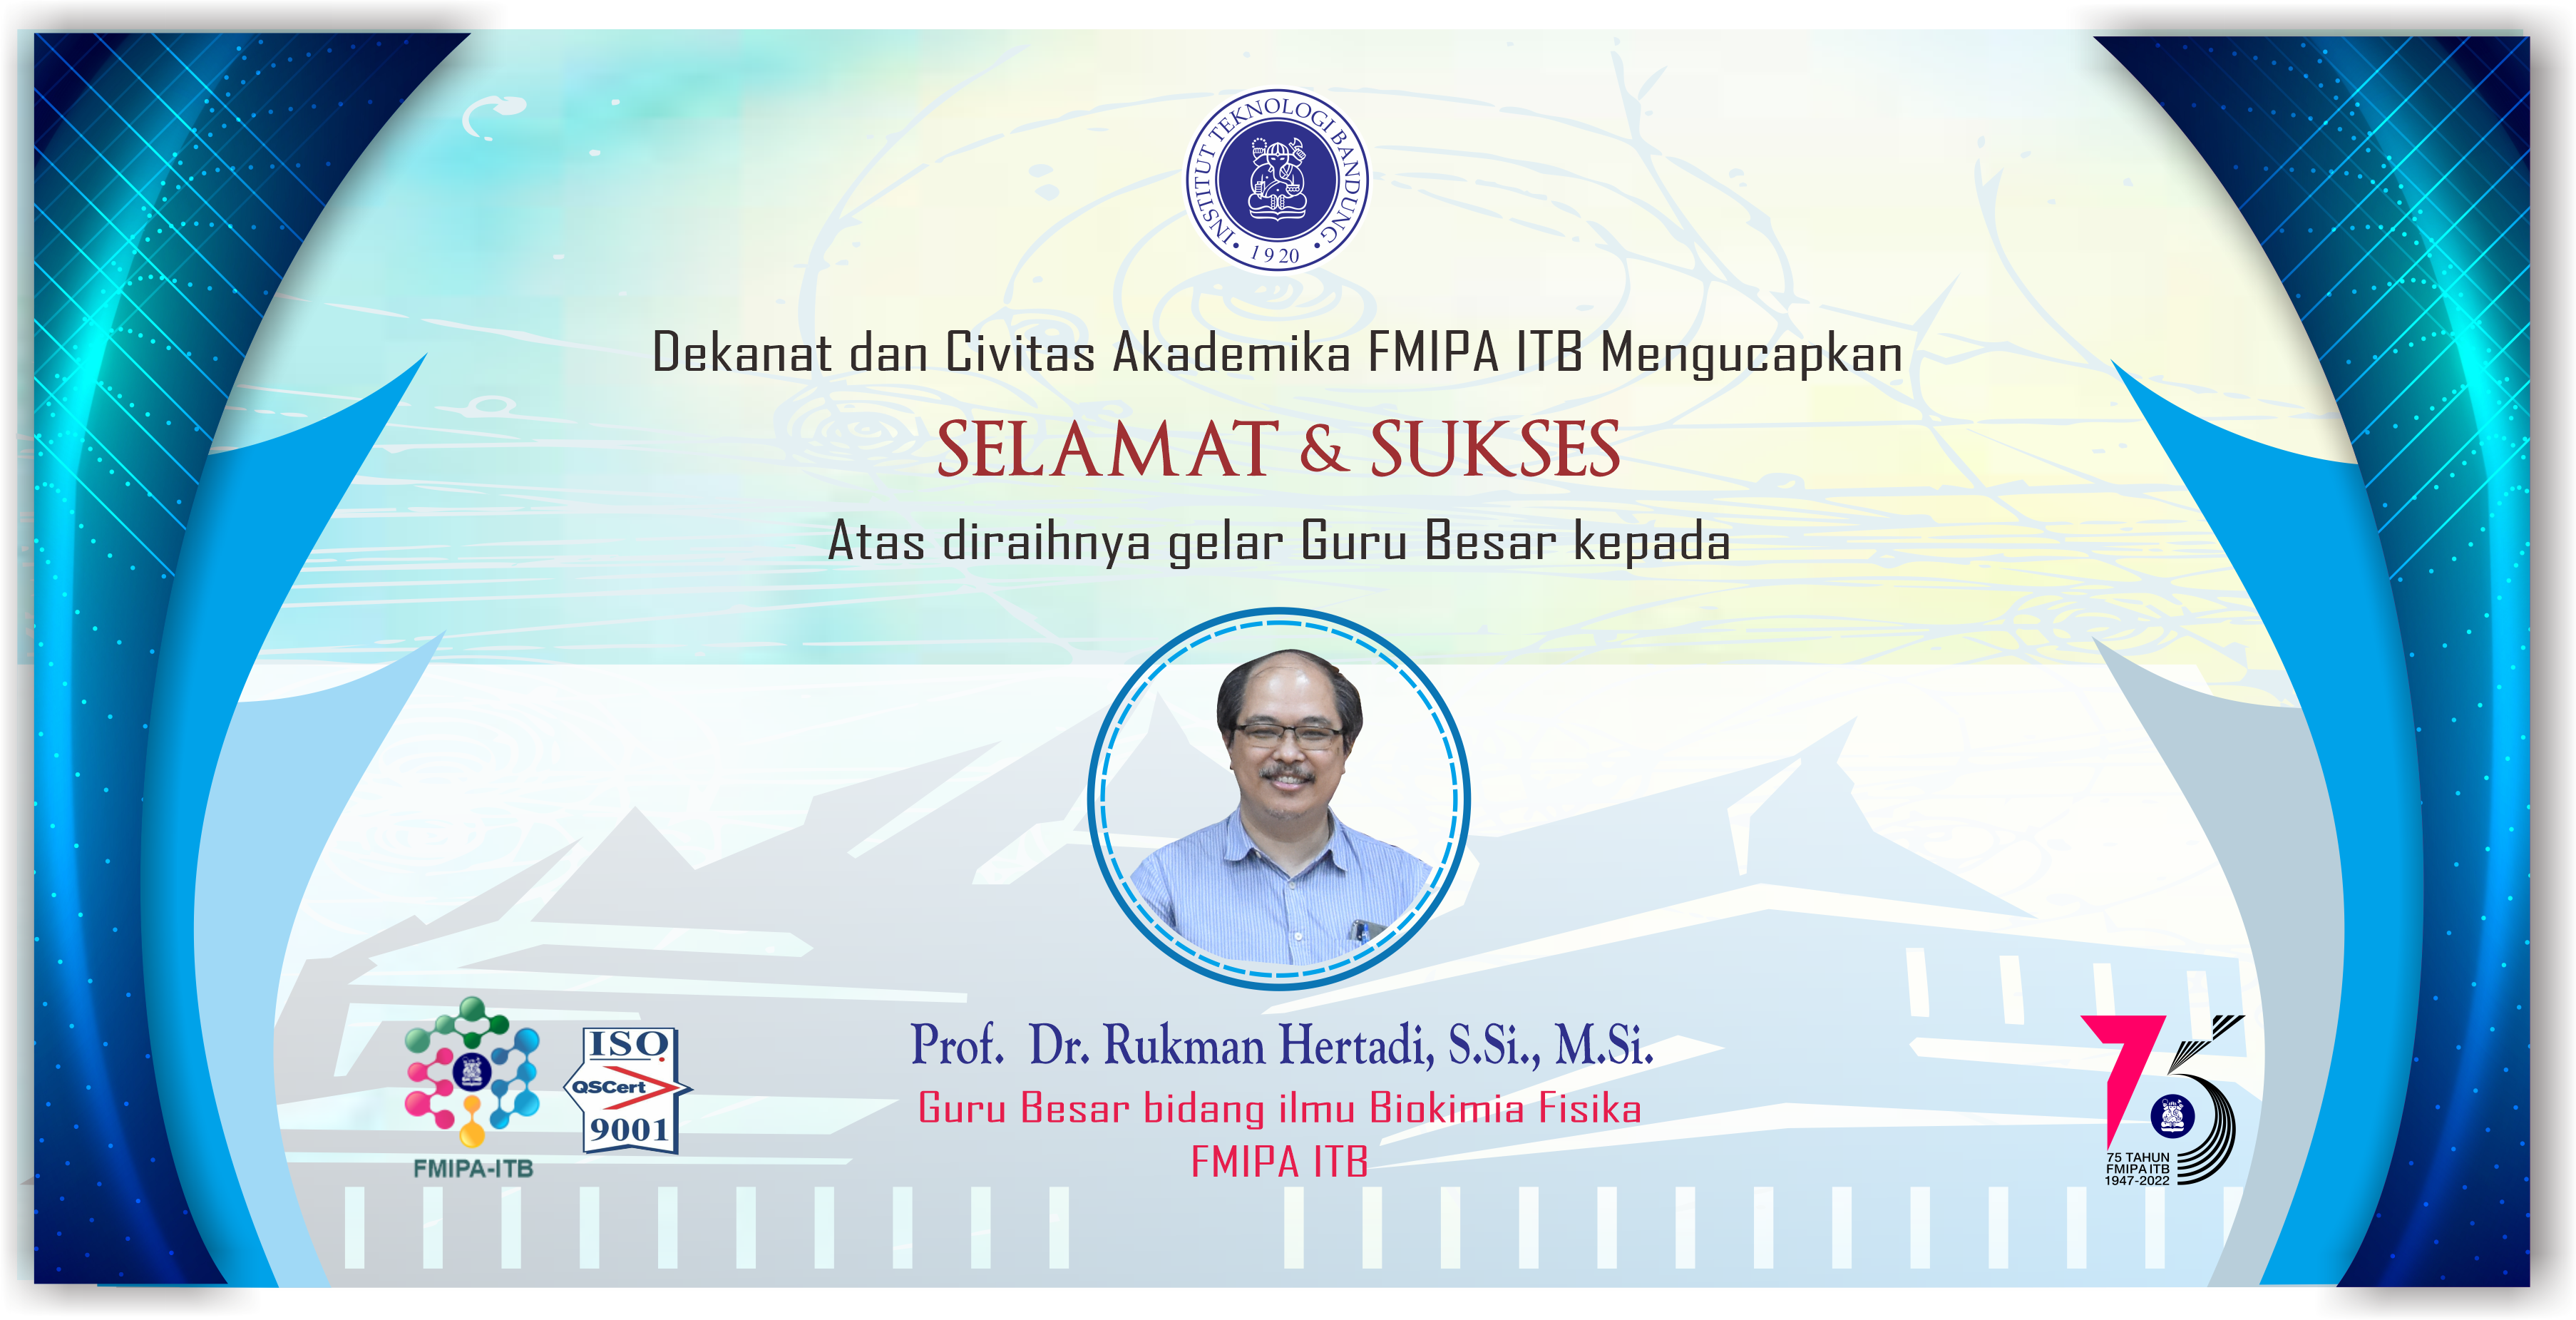 Gelar Guru Besar bidang ilmu Biokimia Fisika FMIPA ITB, Prof.  Dr. Rukman Hertadi, S.Si., M.Si.